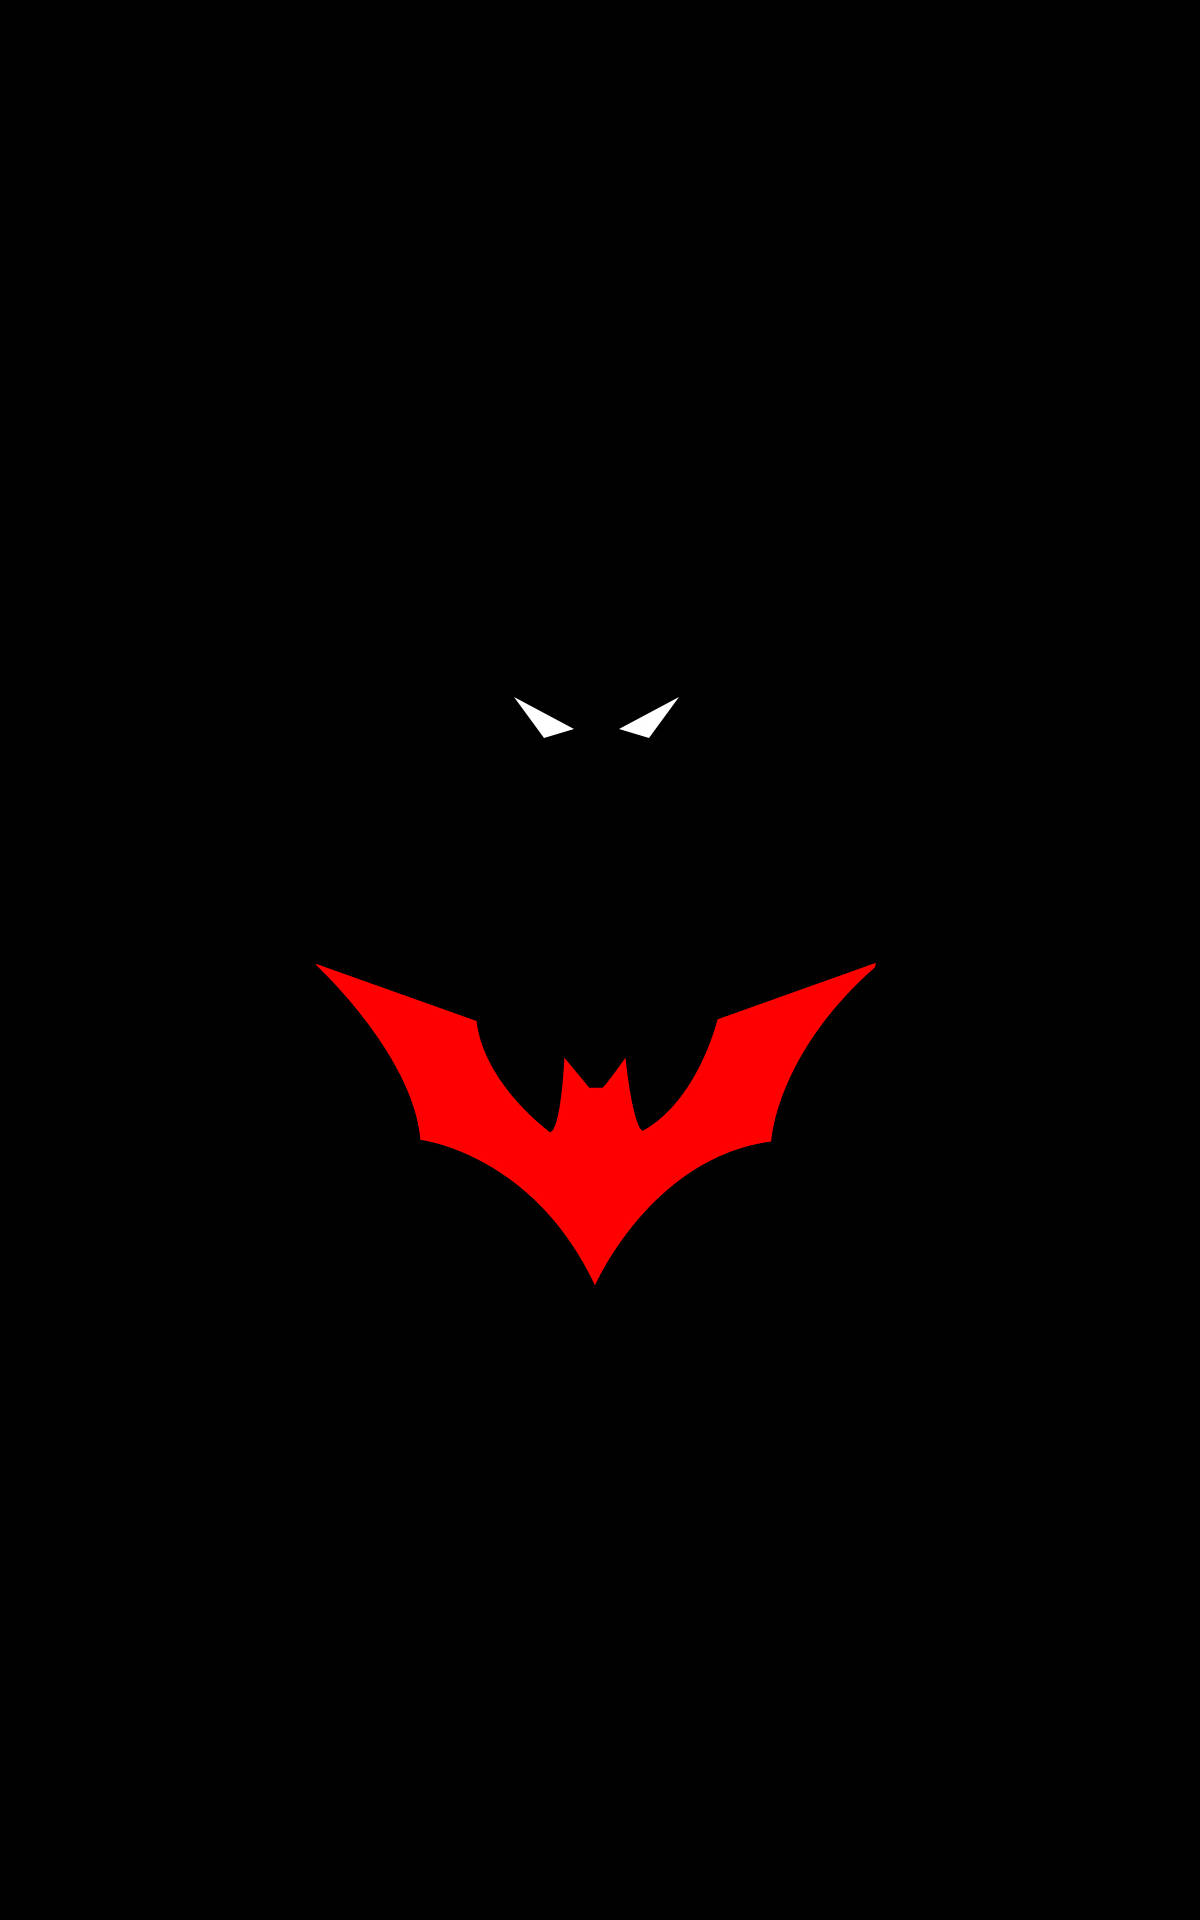 Minimalist Batman Symbol Illustration iPhone Wallpaper